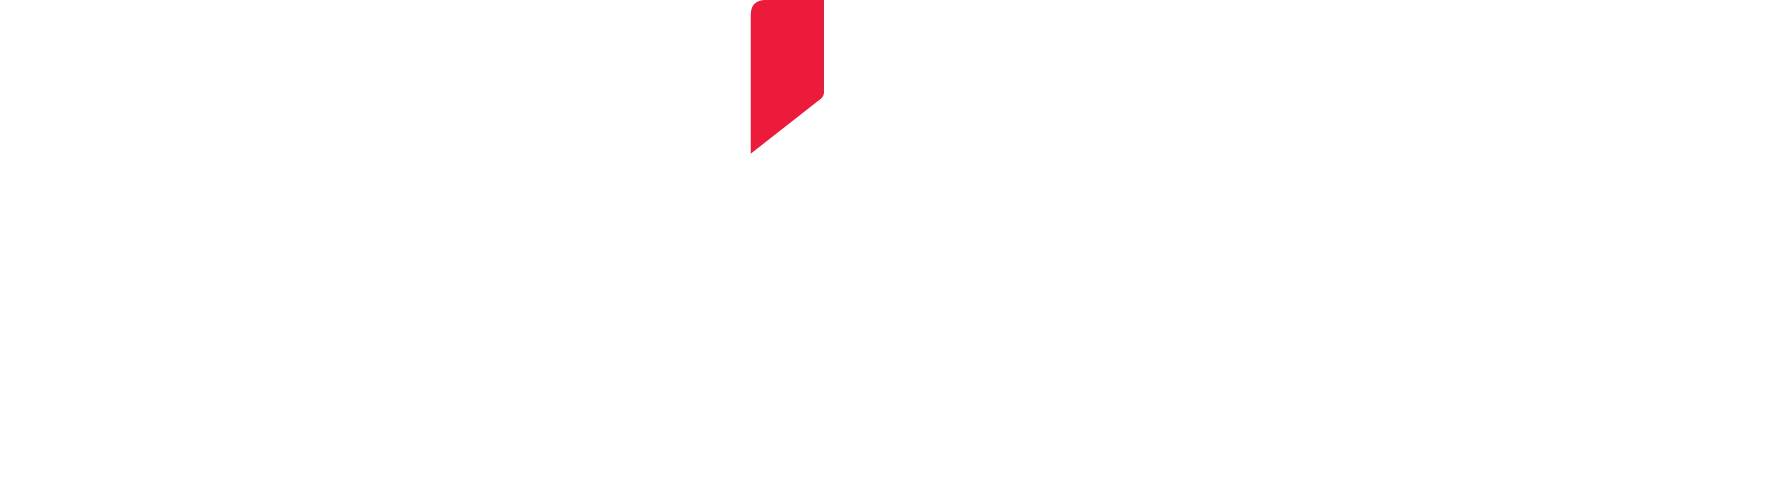 Fujifilm MicroChannel Logo